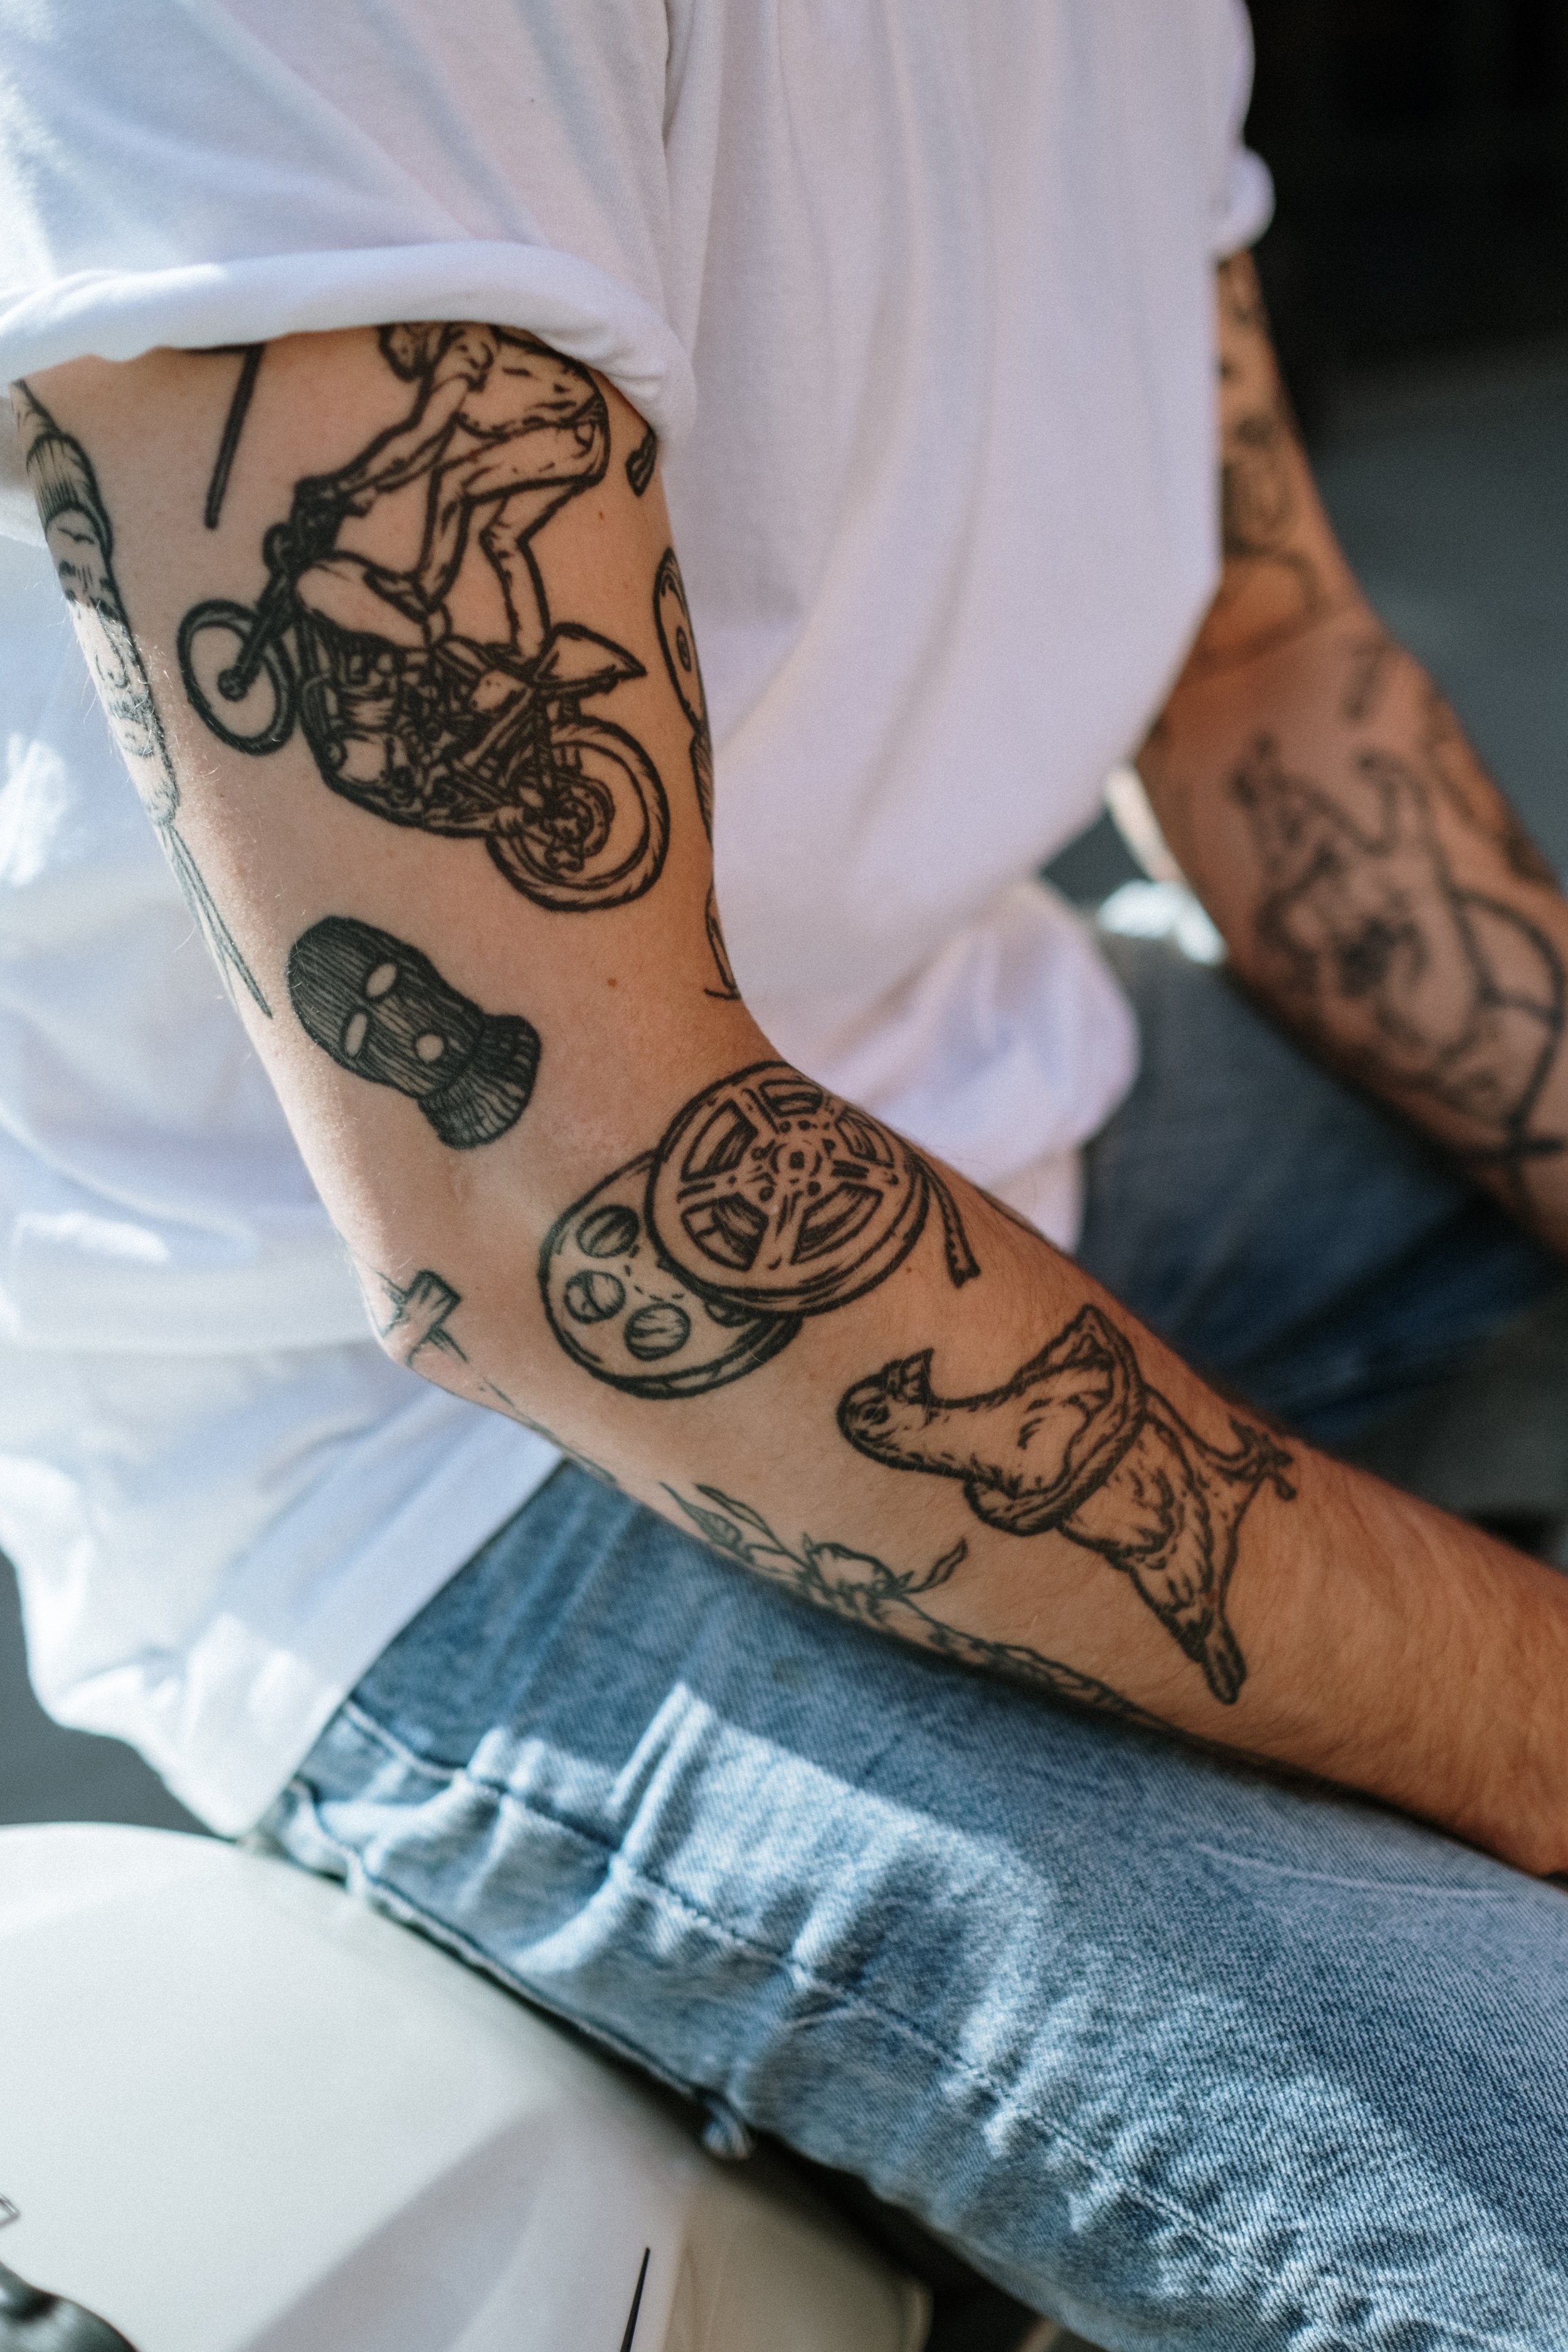 Geometric Tattoos - All Day Tattoo Studio in Bangkok, Thailand